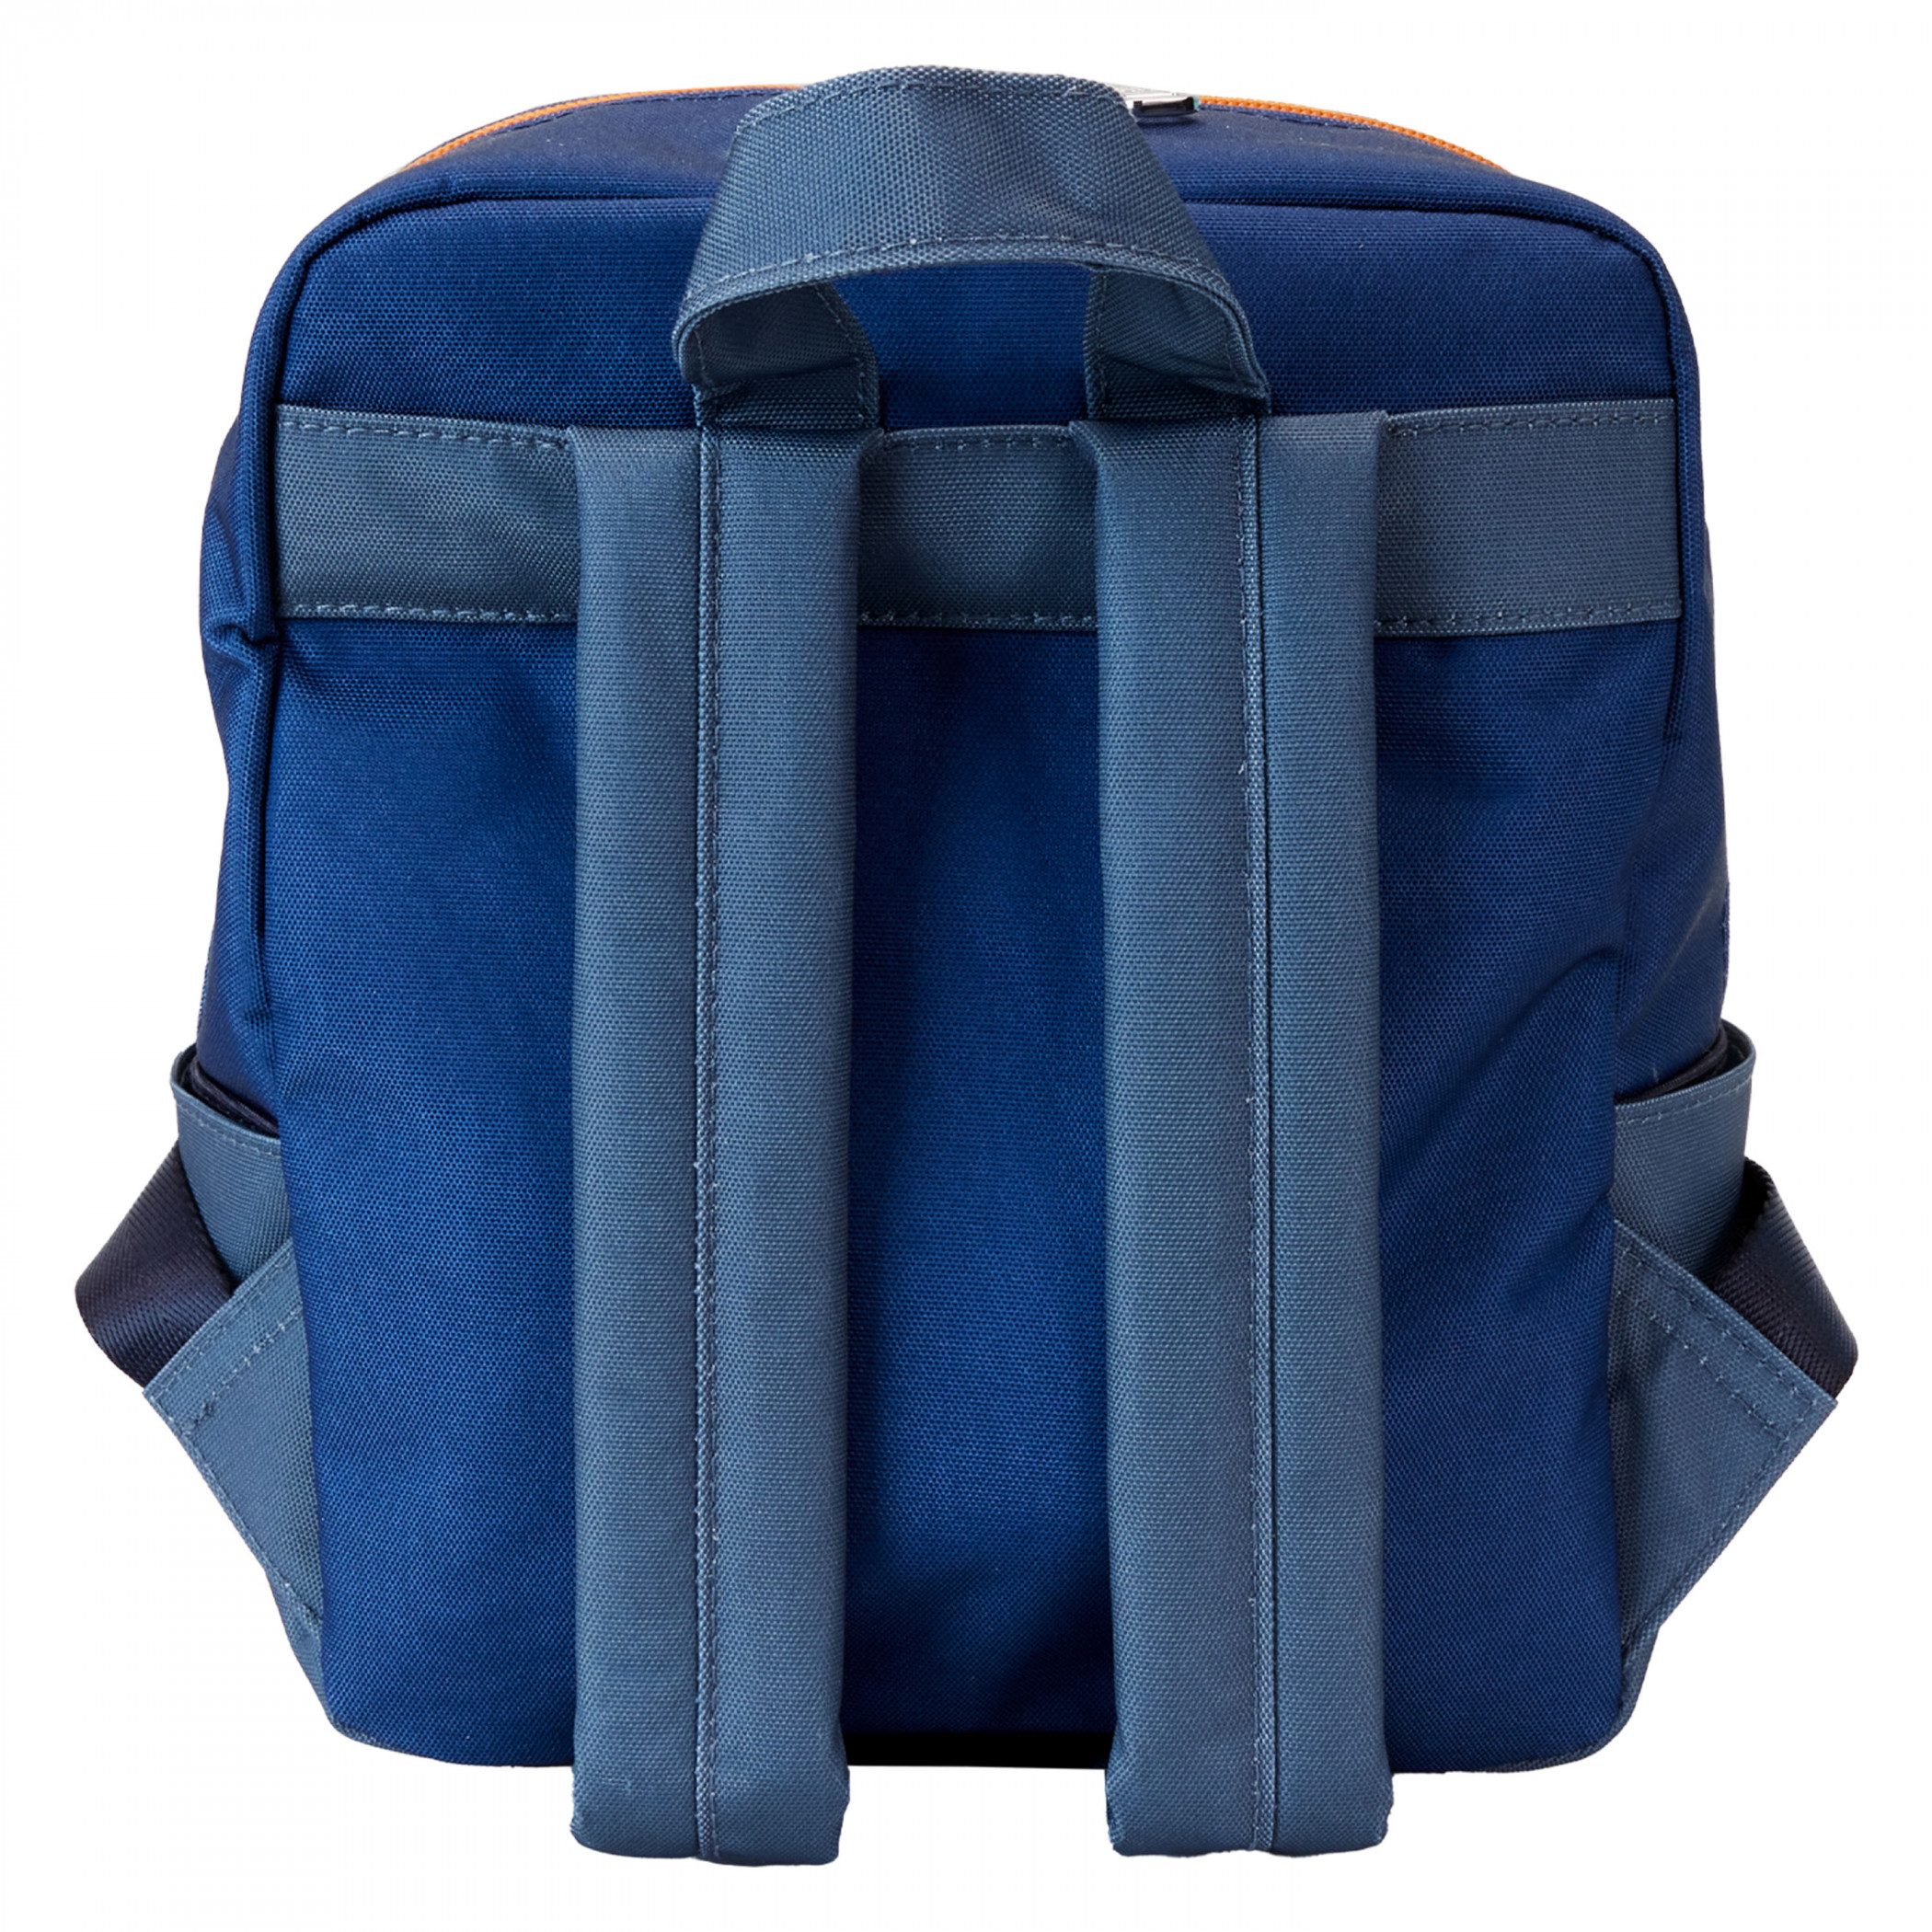 Star Wars Ahsoka Square Cosplay Mini Backpack By Loungefly